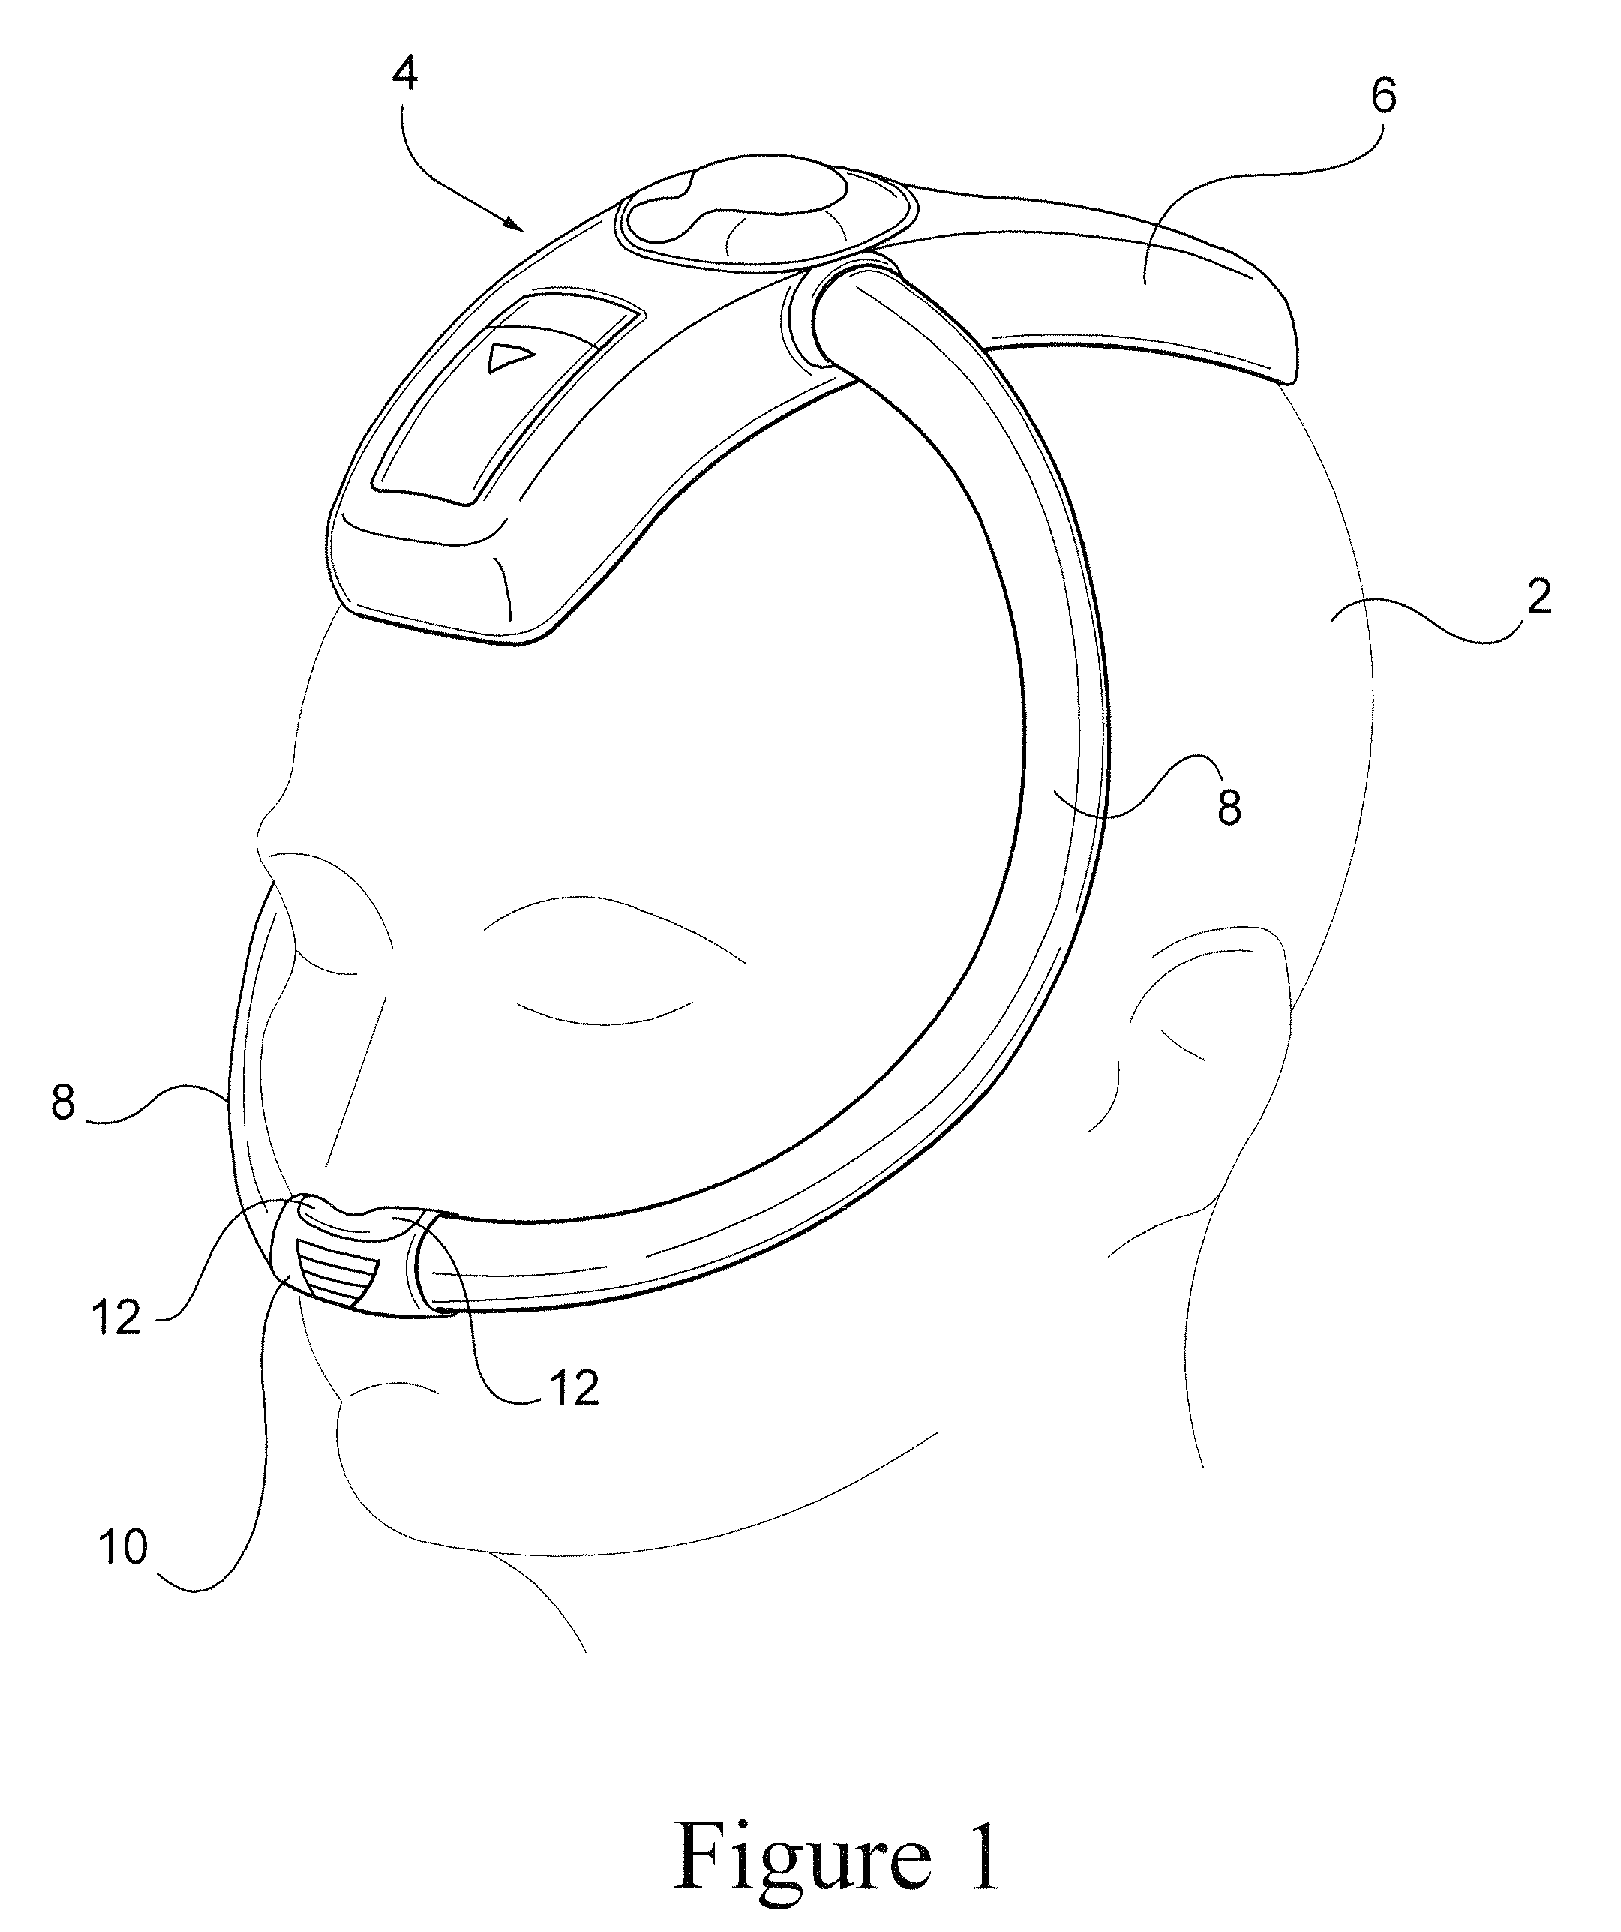 Respiratory apparatus